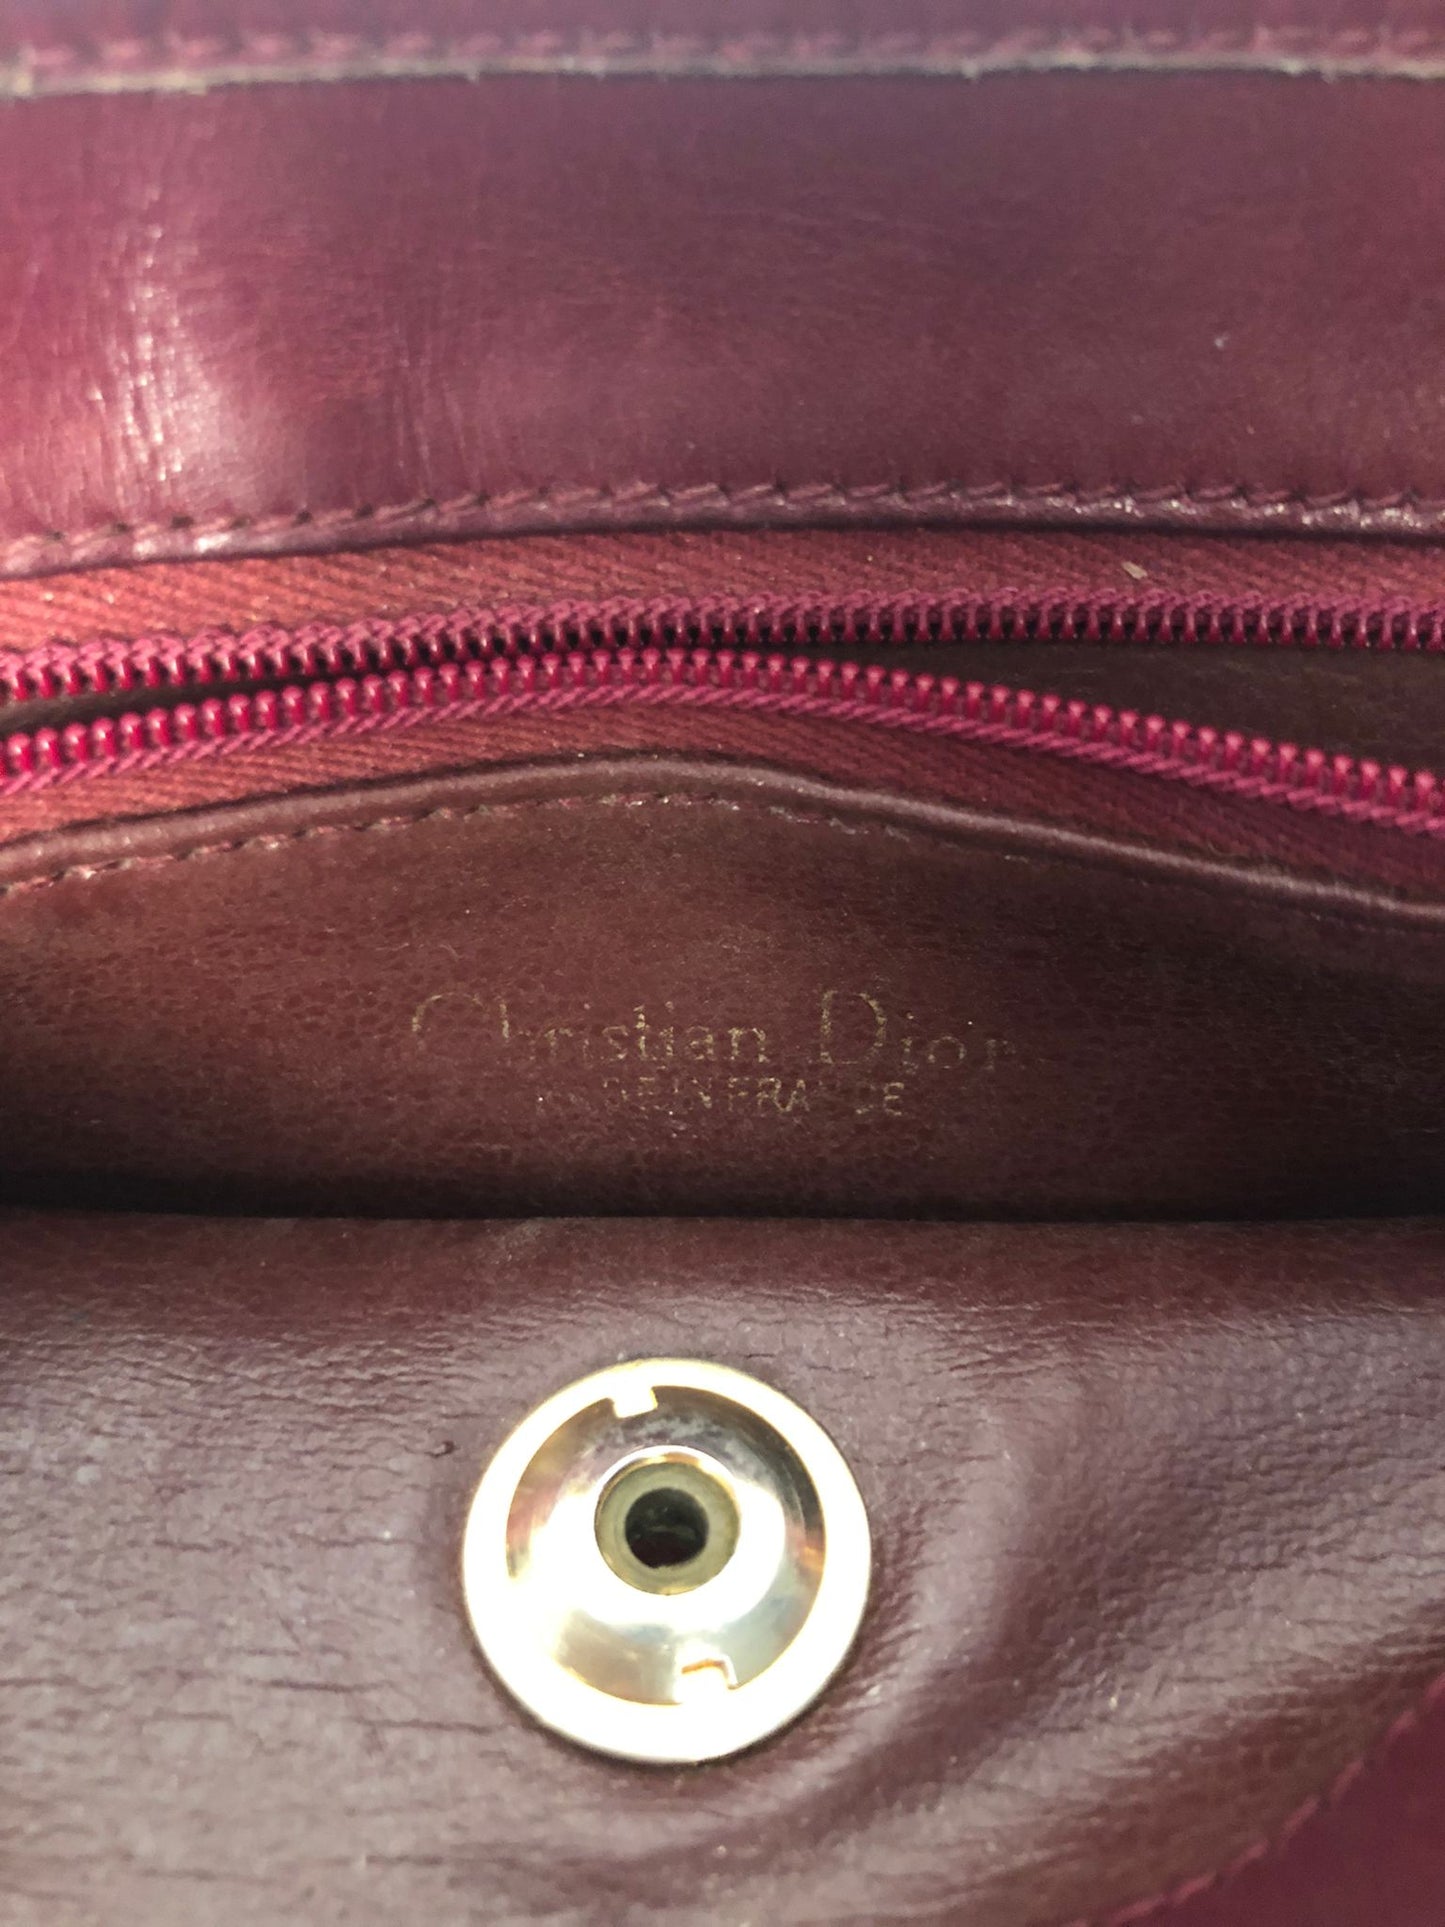 Christian Dior vintage burgundy leather bag - 1970s